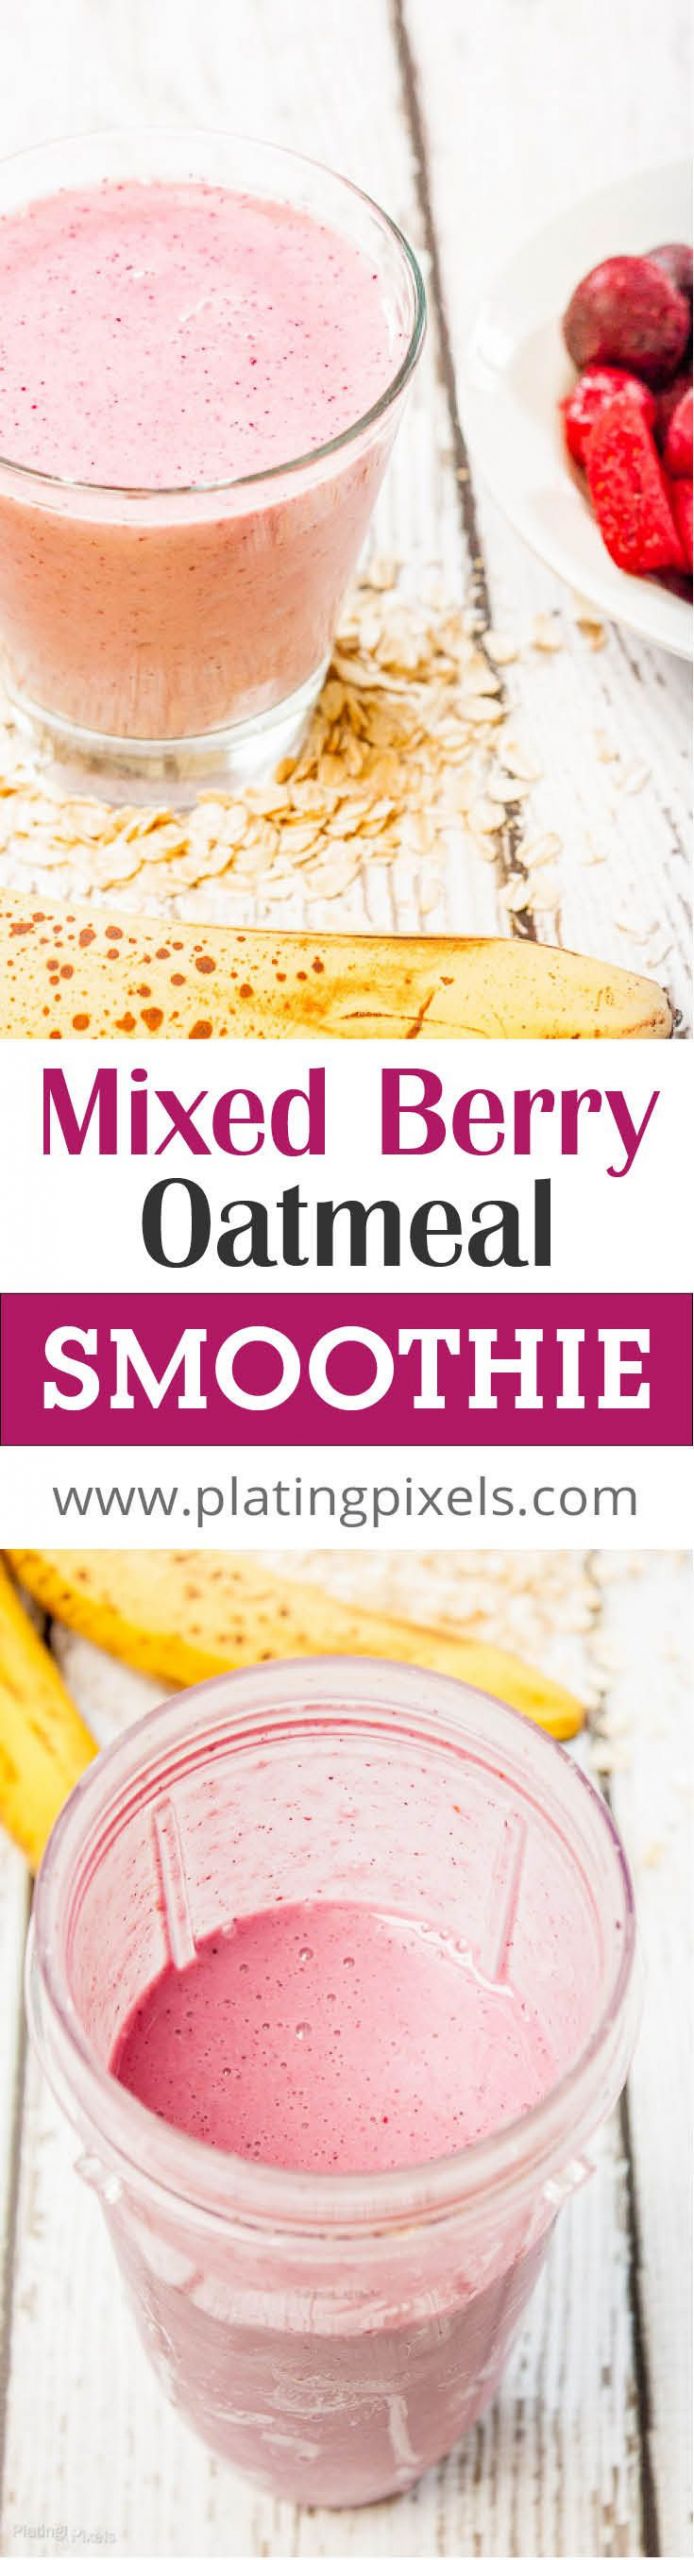 Yogurt Smoothie Recipes With Frozen Fruit
 Blueberry Peanut Protein Smoothie Recipe